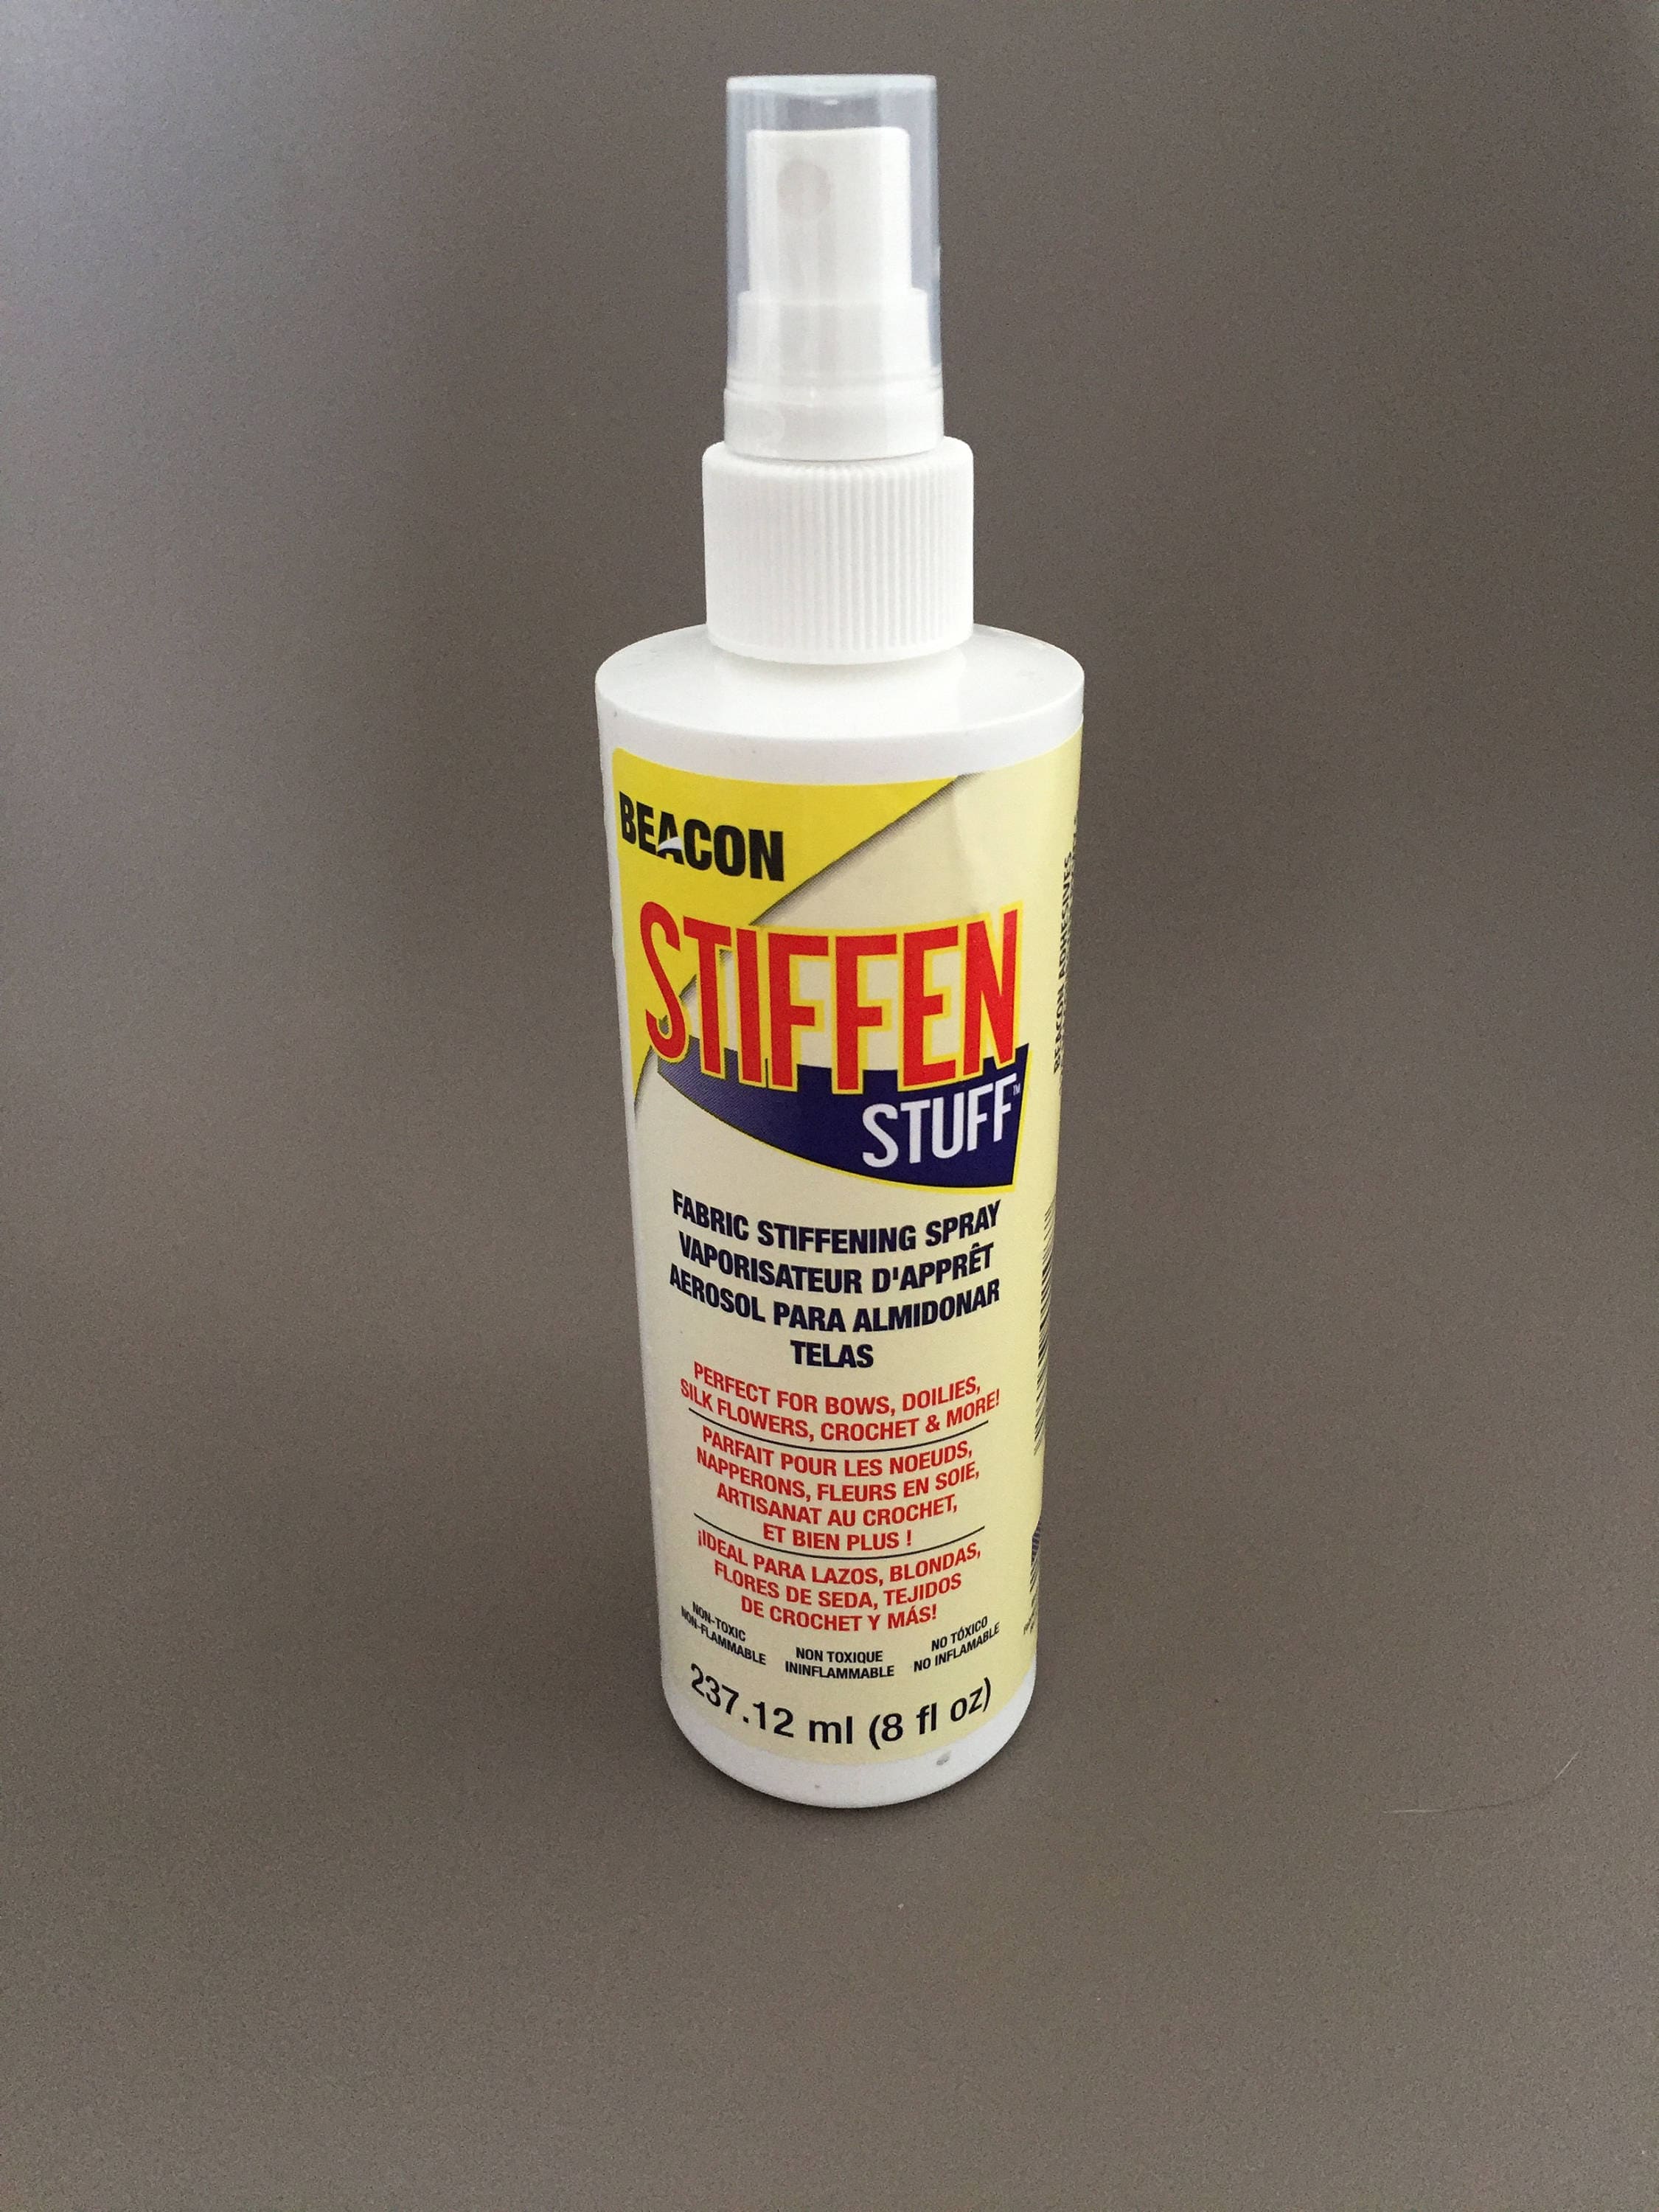 Beacon Adhesives Fabric Stiffening Spray Stiffen Stuff 236ml 